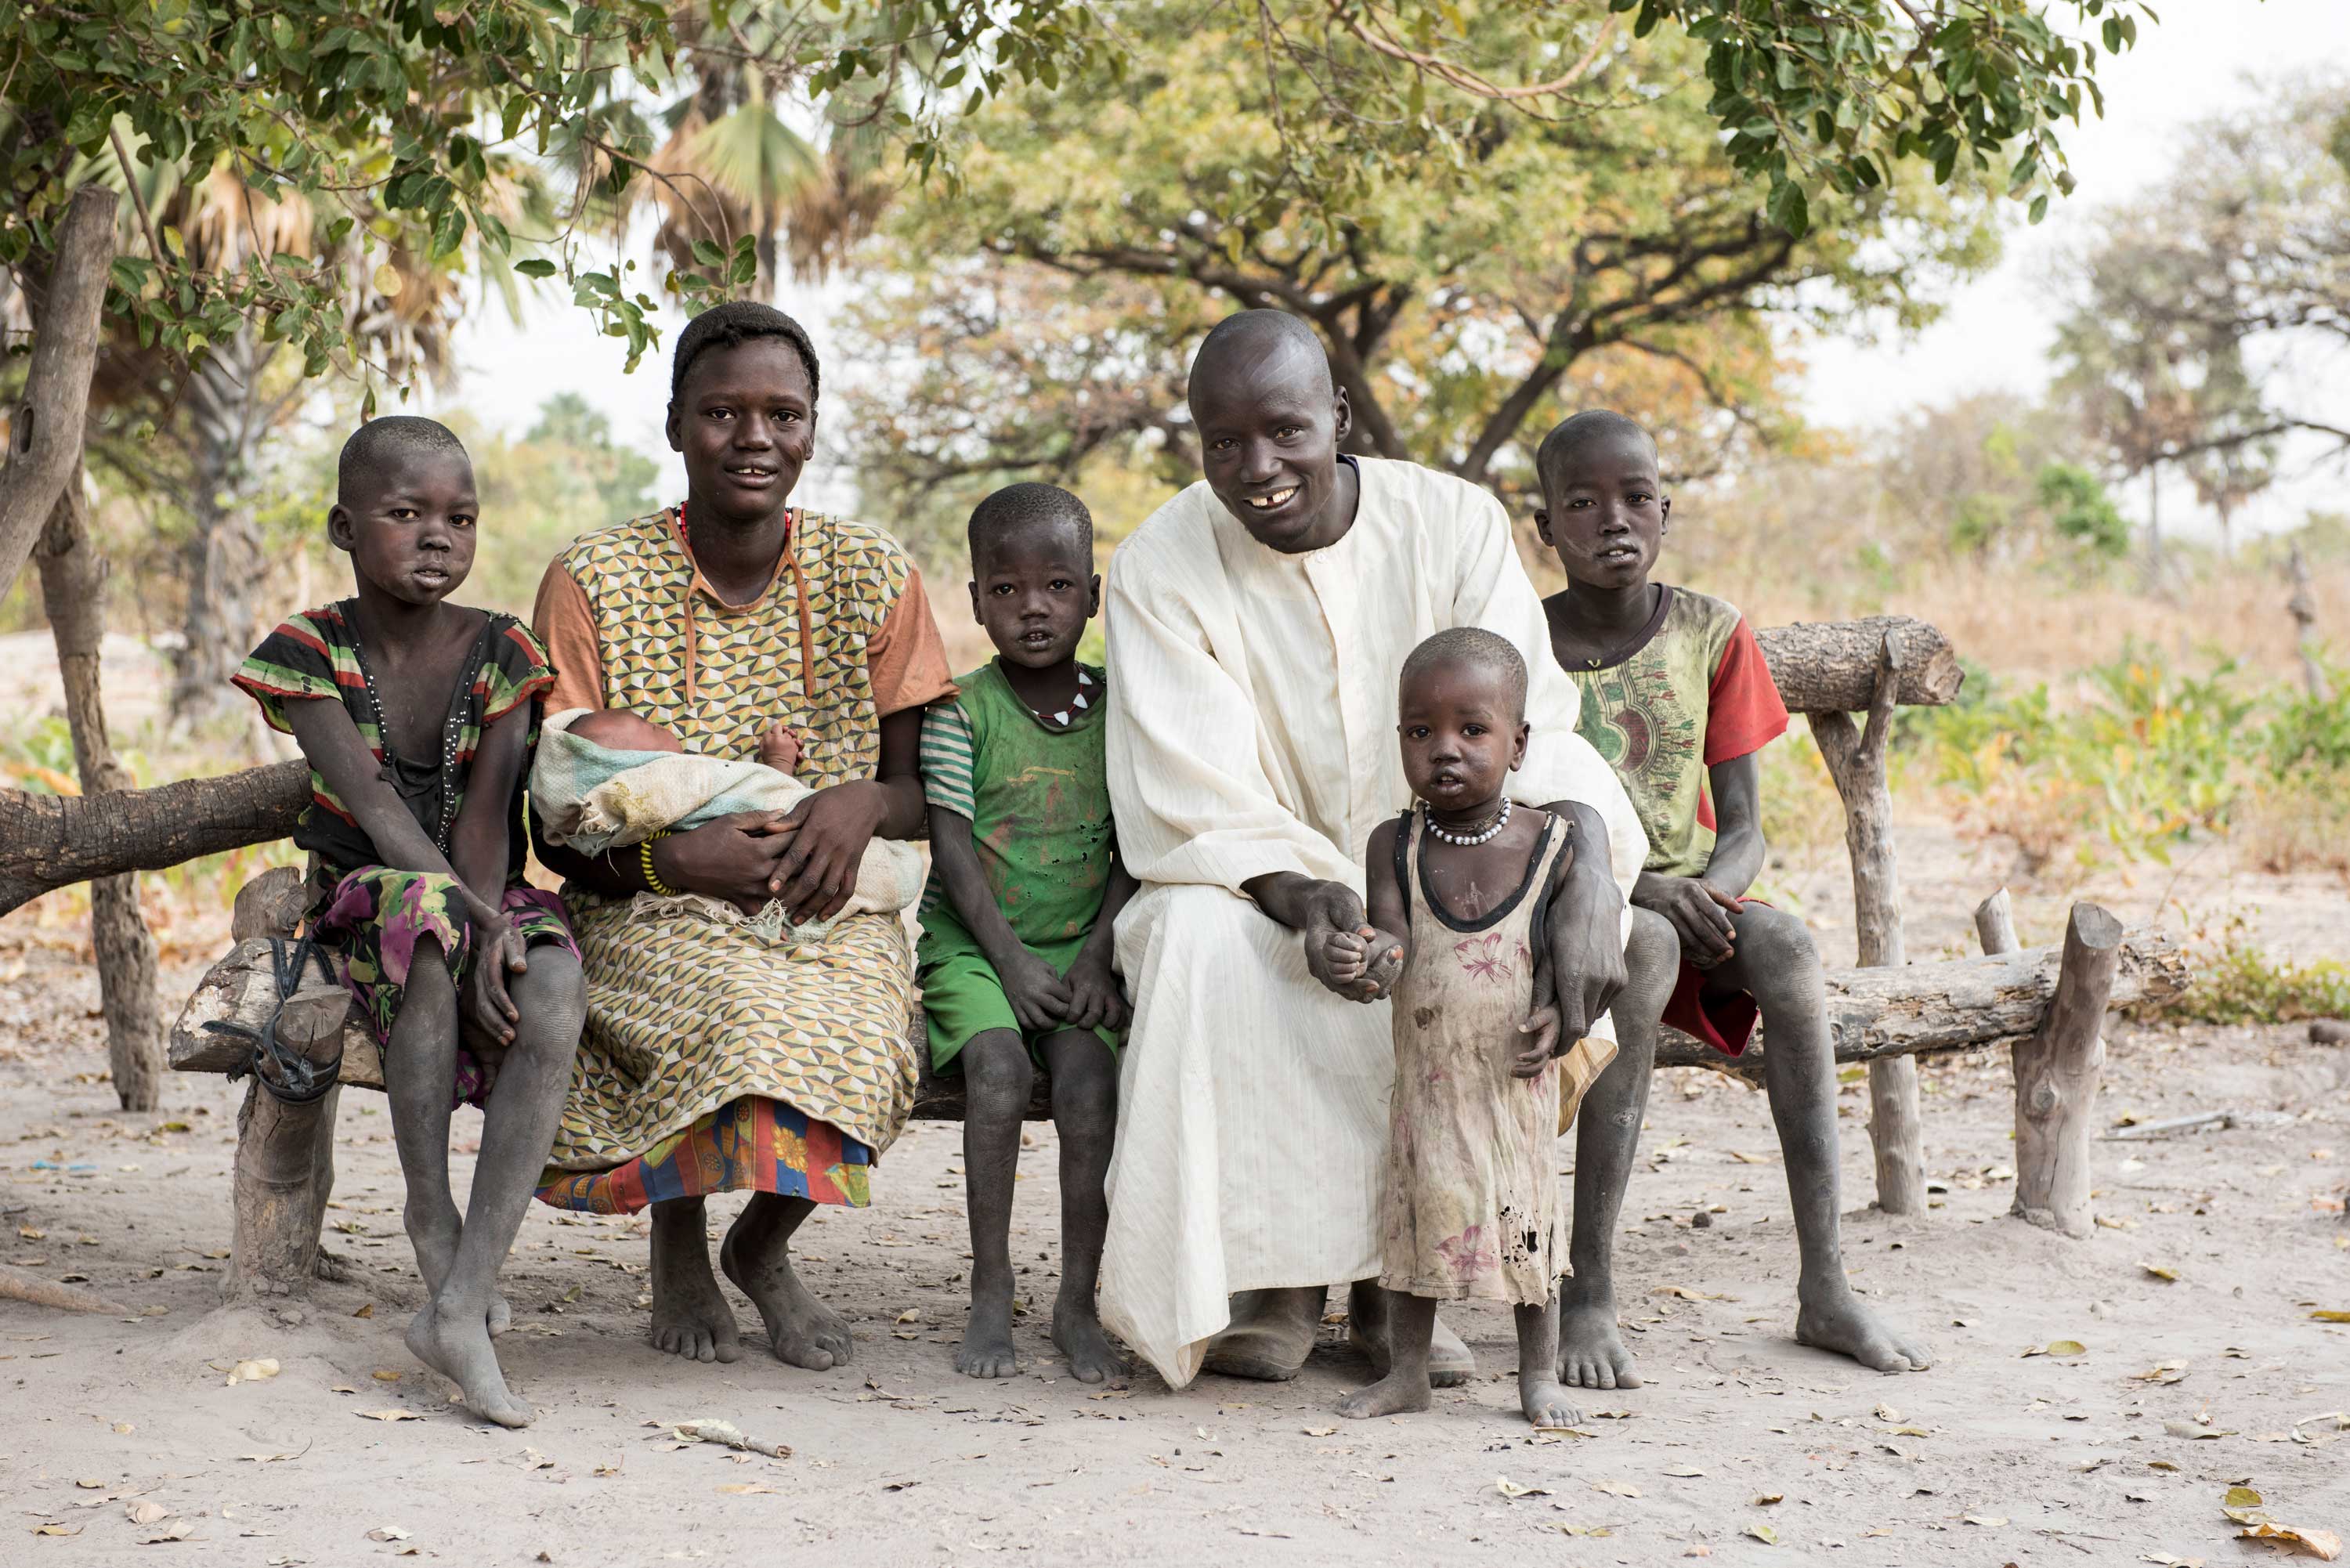 Help Transform Aluelweng, South Sudan